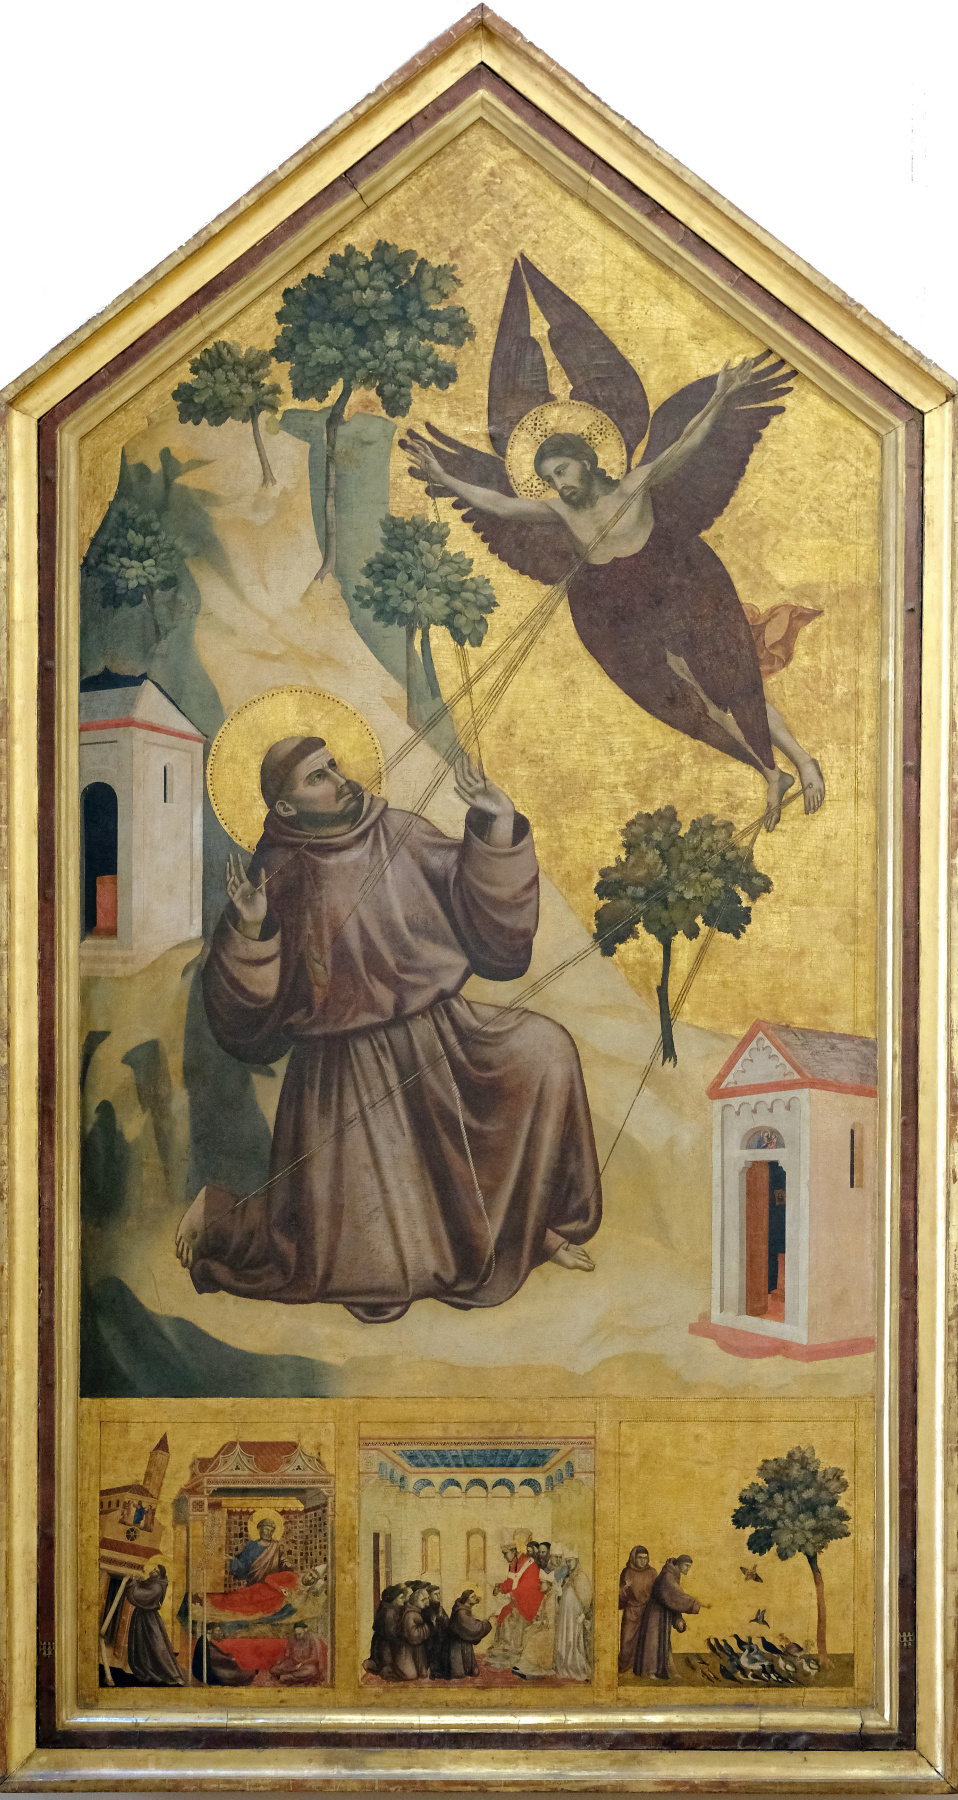 Джотто ди Бондоне. Panel "Saint Francis of Assisi, received stigmata" with the limits